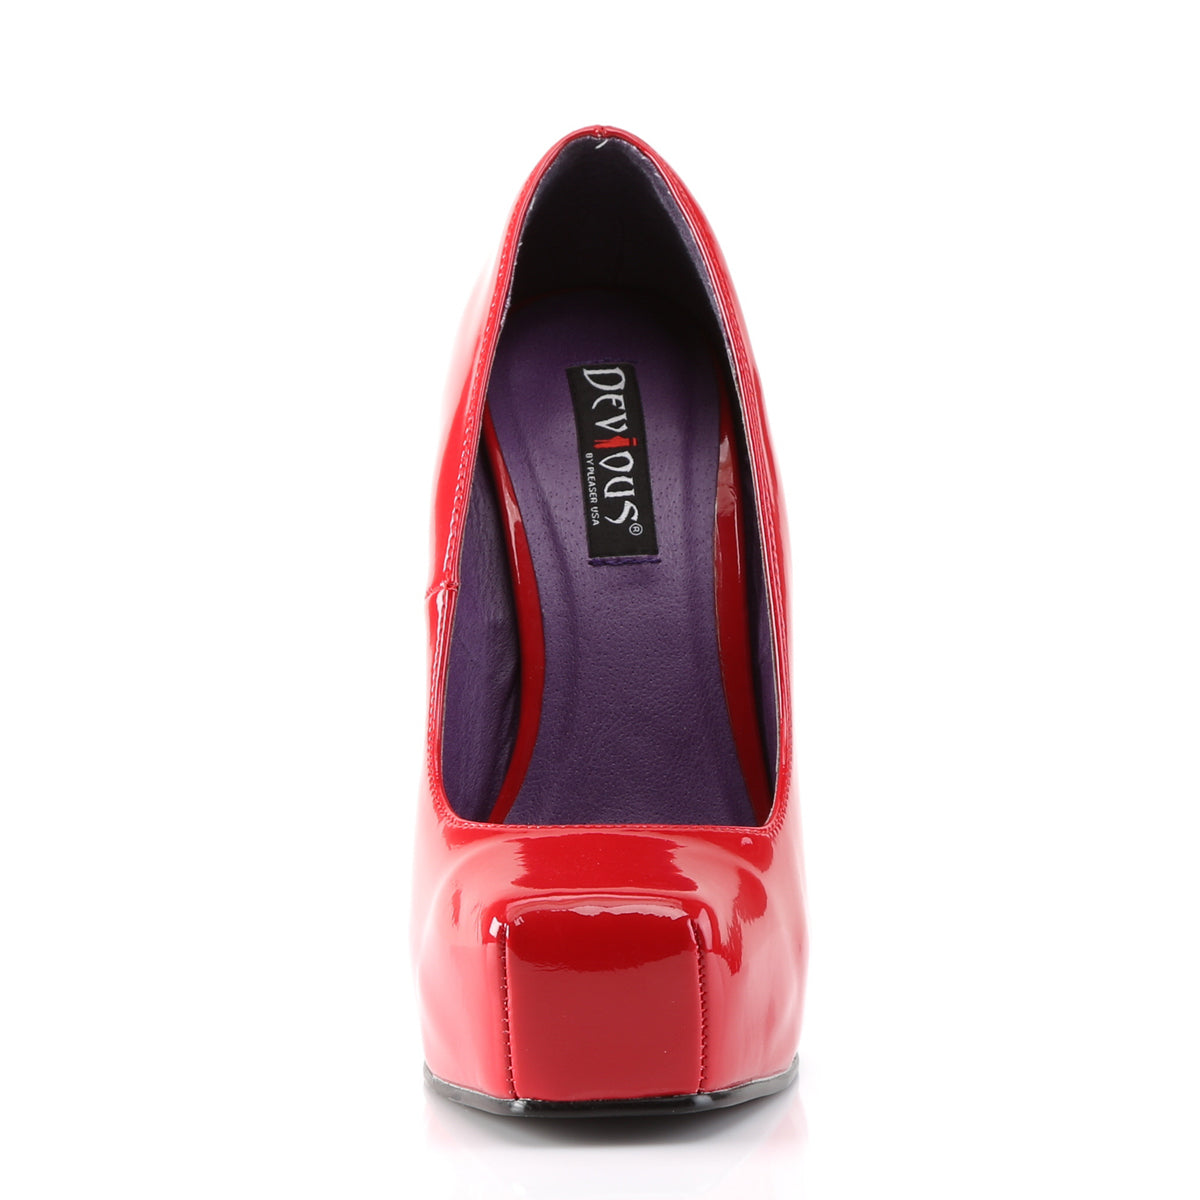 BONDAGE 01 Devious Fetish Shoe 5.5" Heel Red Platforms Shoe Devious Heels Alternative Footwear